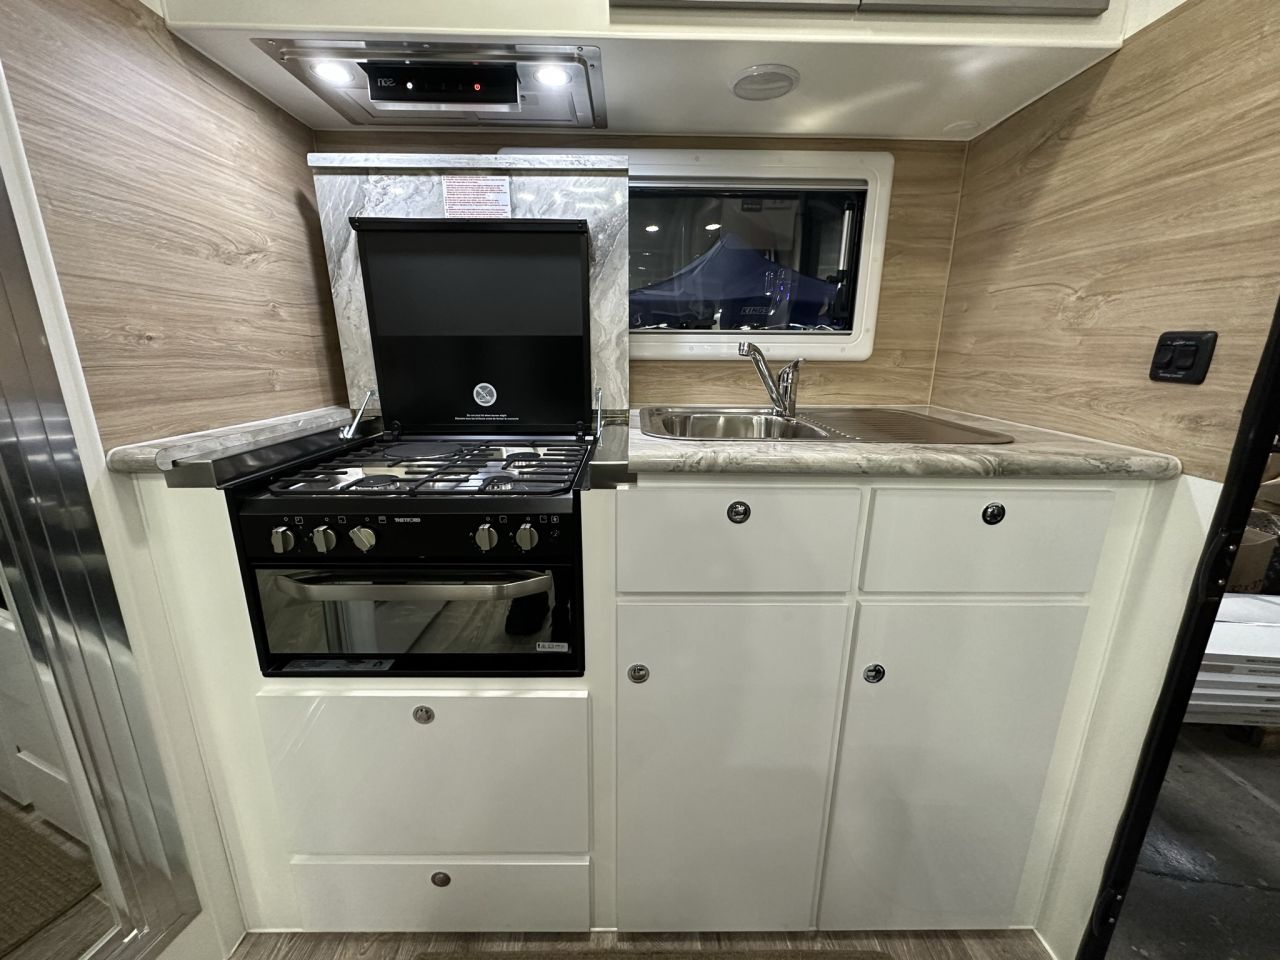 15'8 Paramount Micro kitchen with stovetop